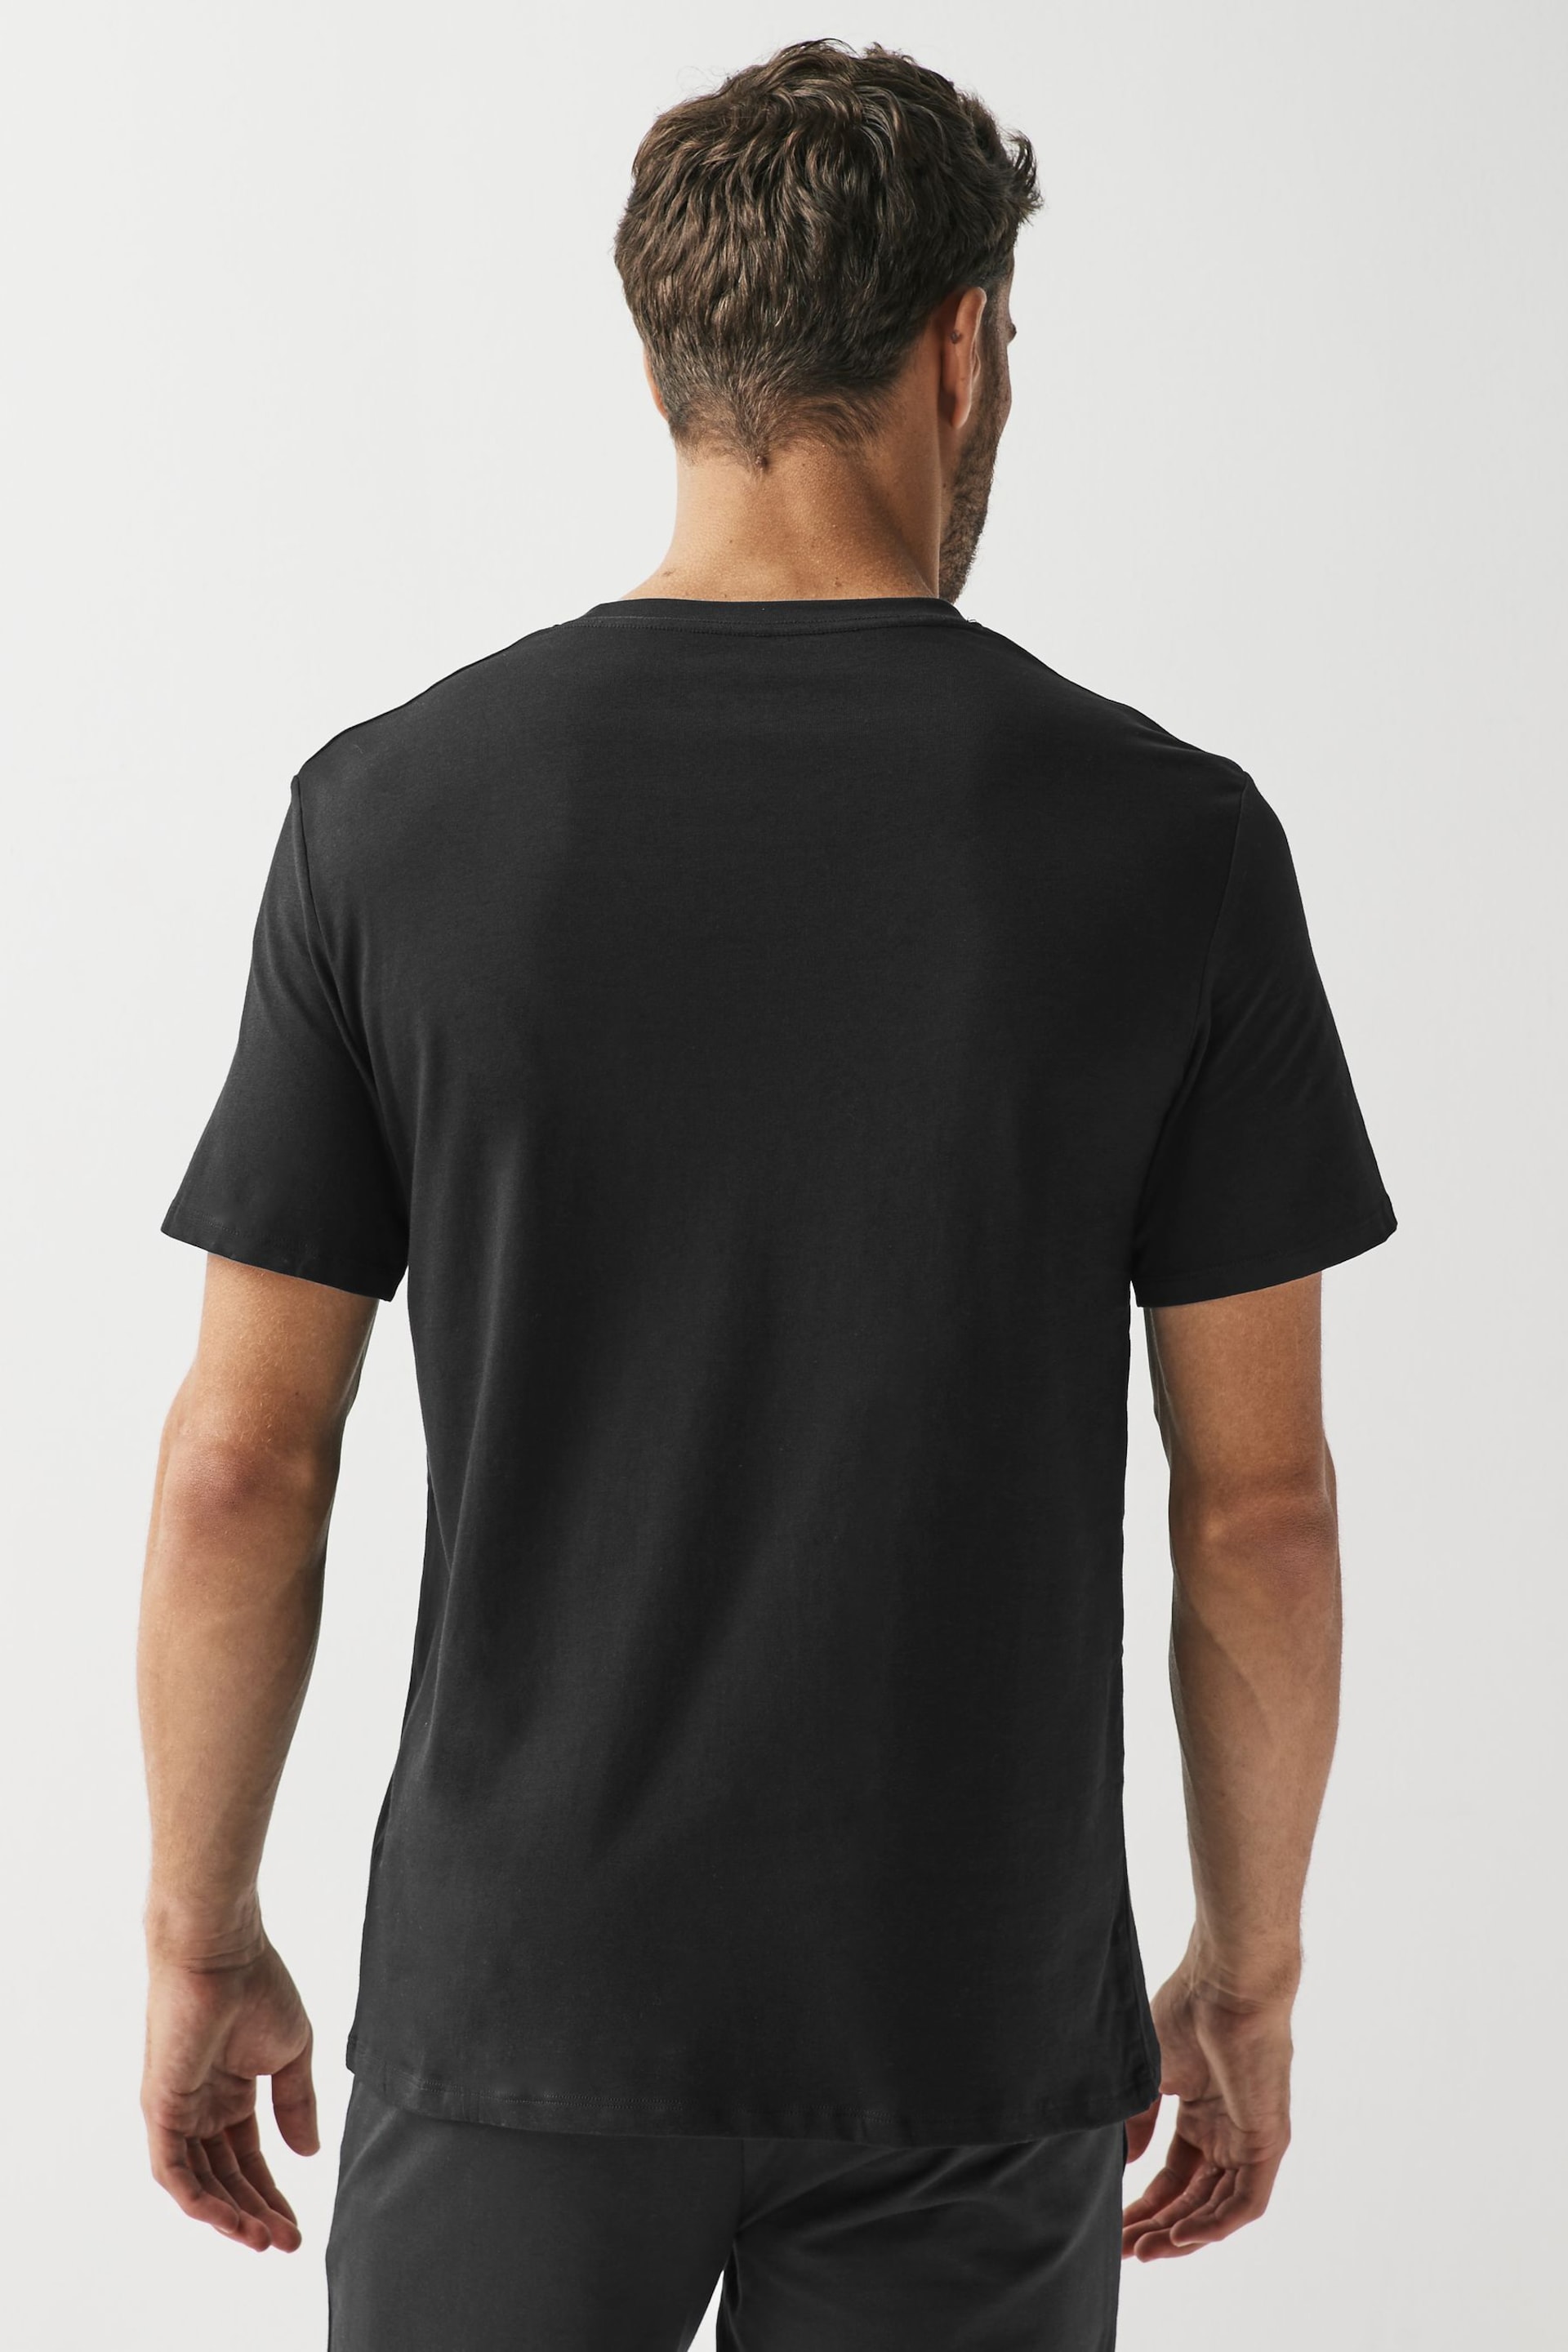 Ted Baker Black Crew Neck T-Shirt 3 Pack - Image 2 of 6